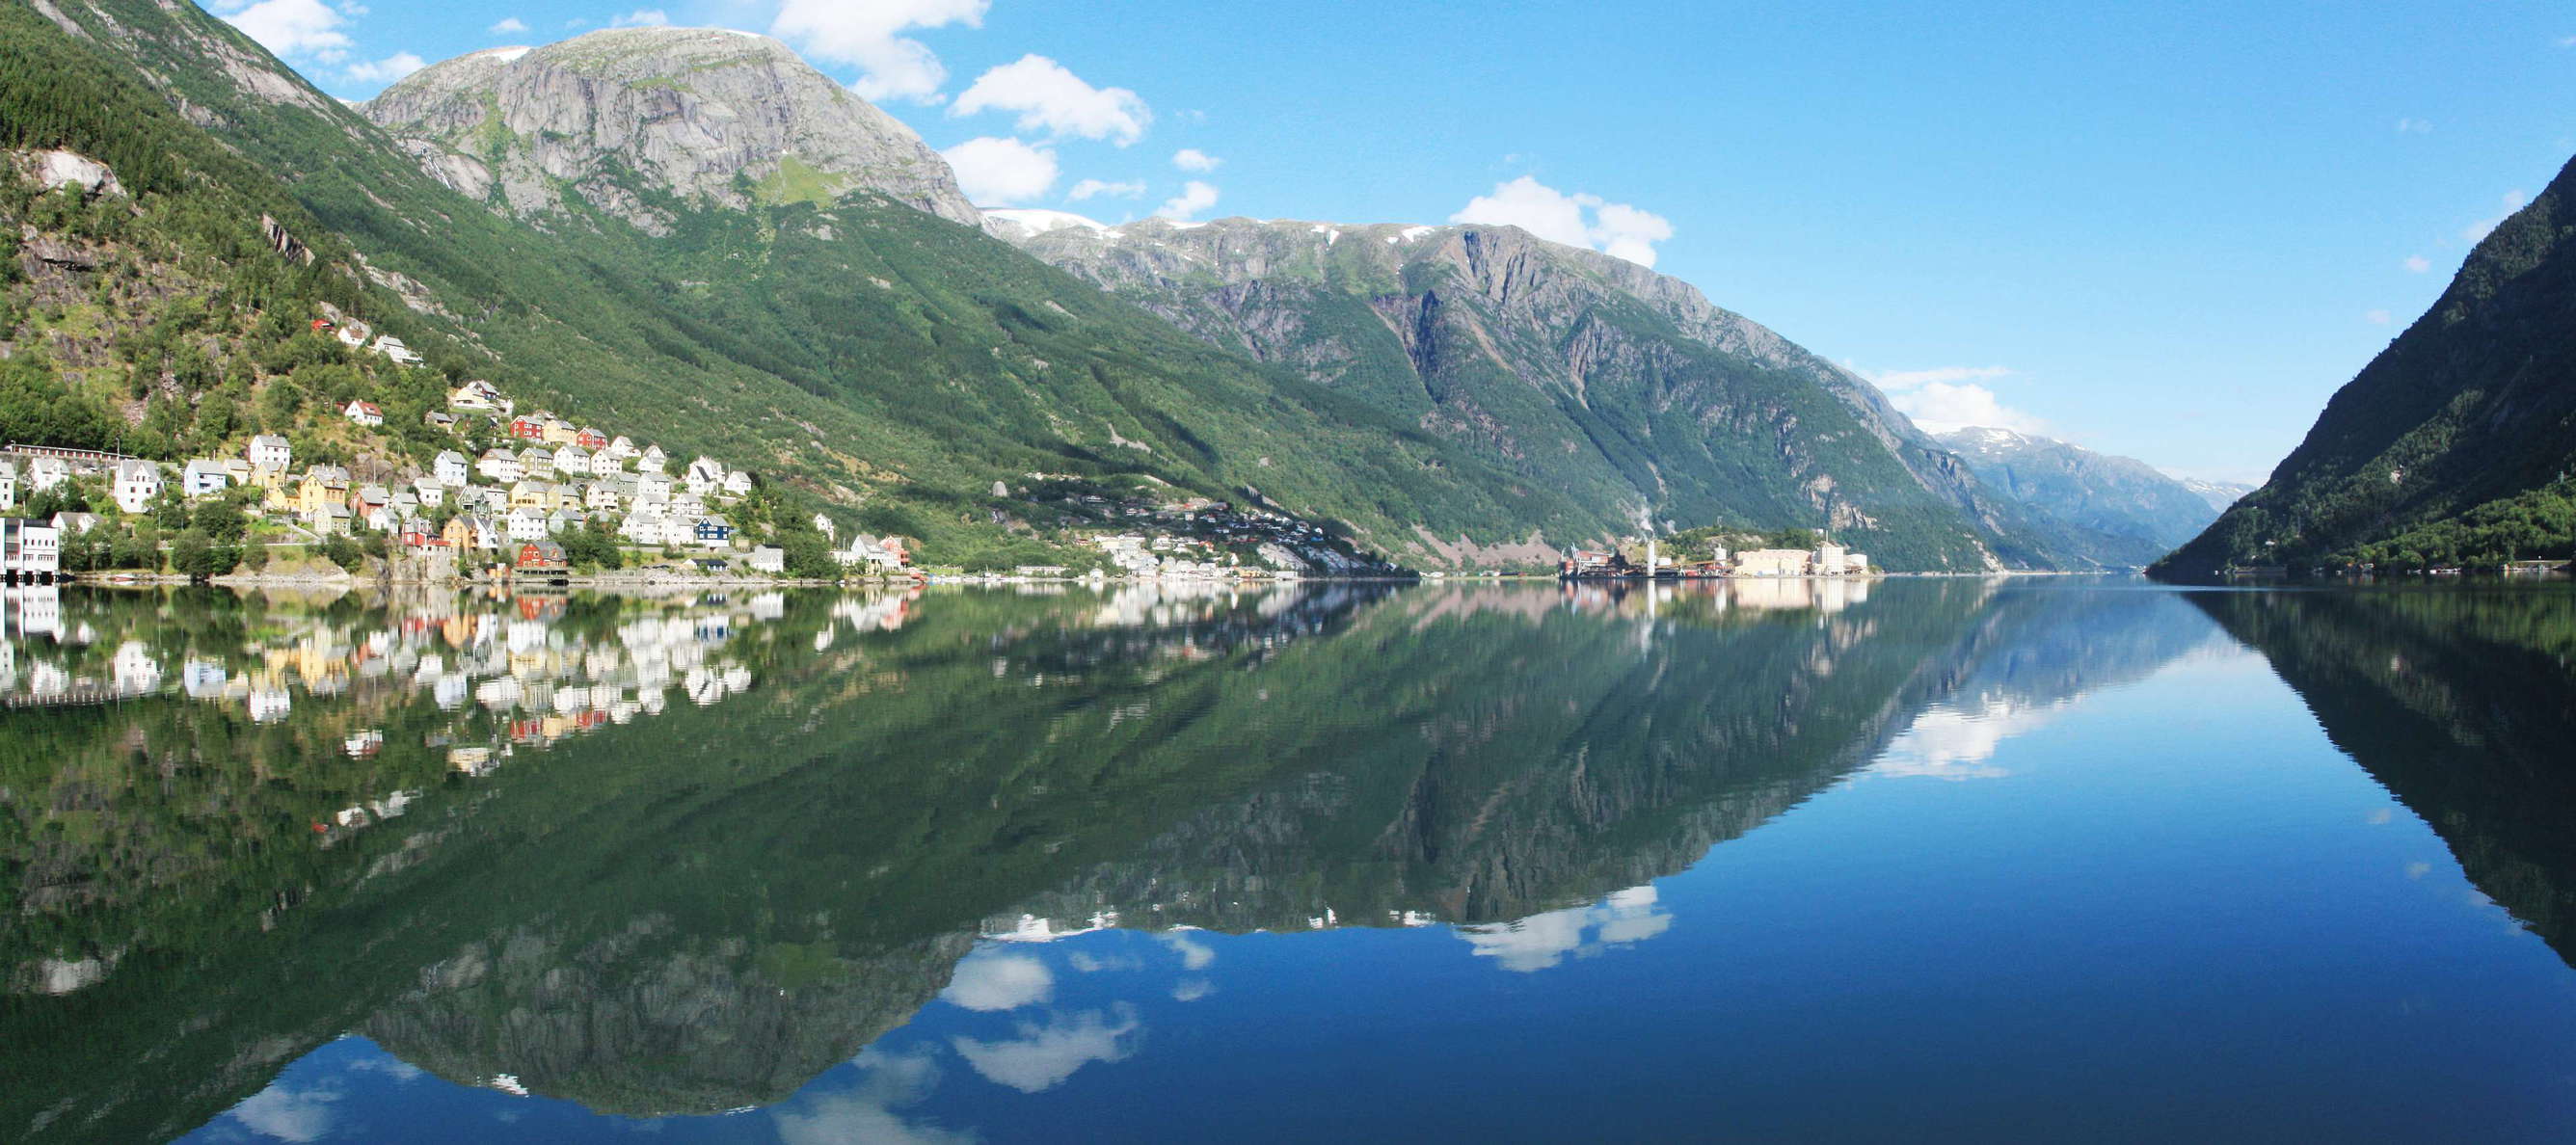 Sørfjorden |  Reflections